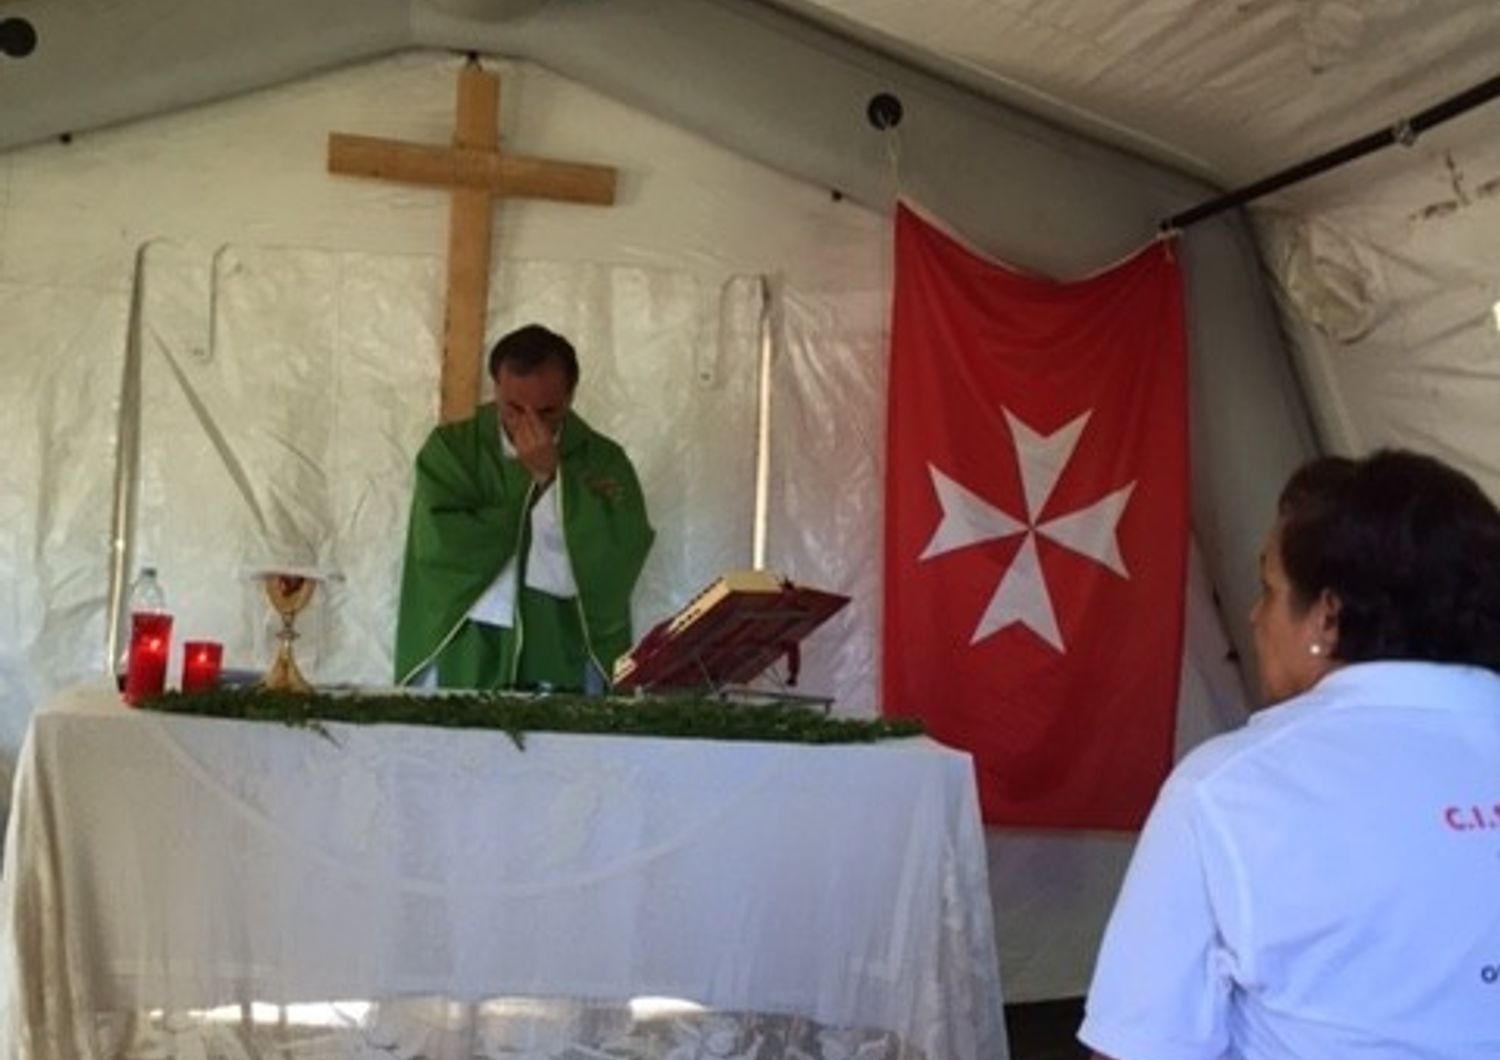 Vescovo Rieti celebra messa ad Amatrice - Terremoto&nbsp;